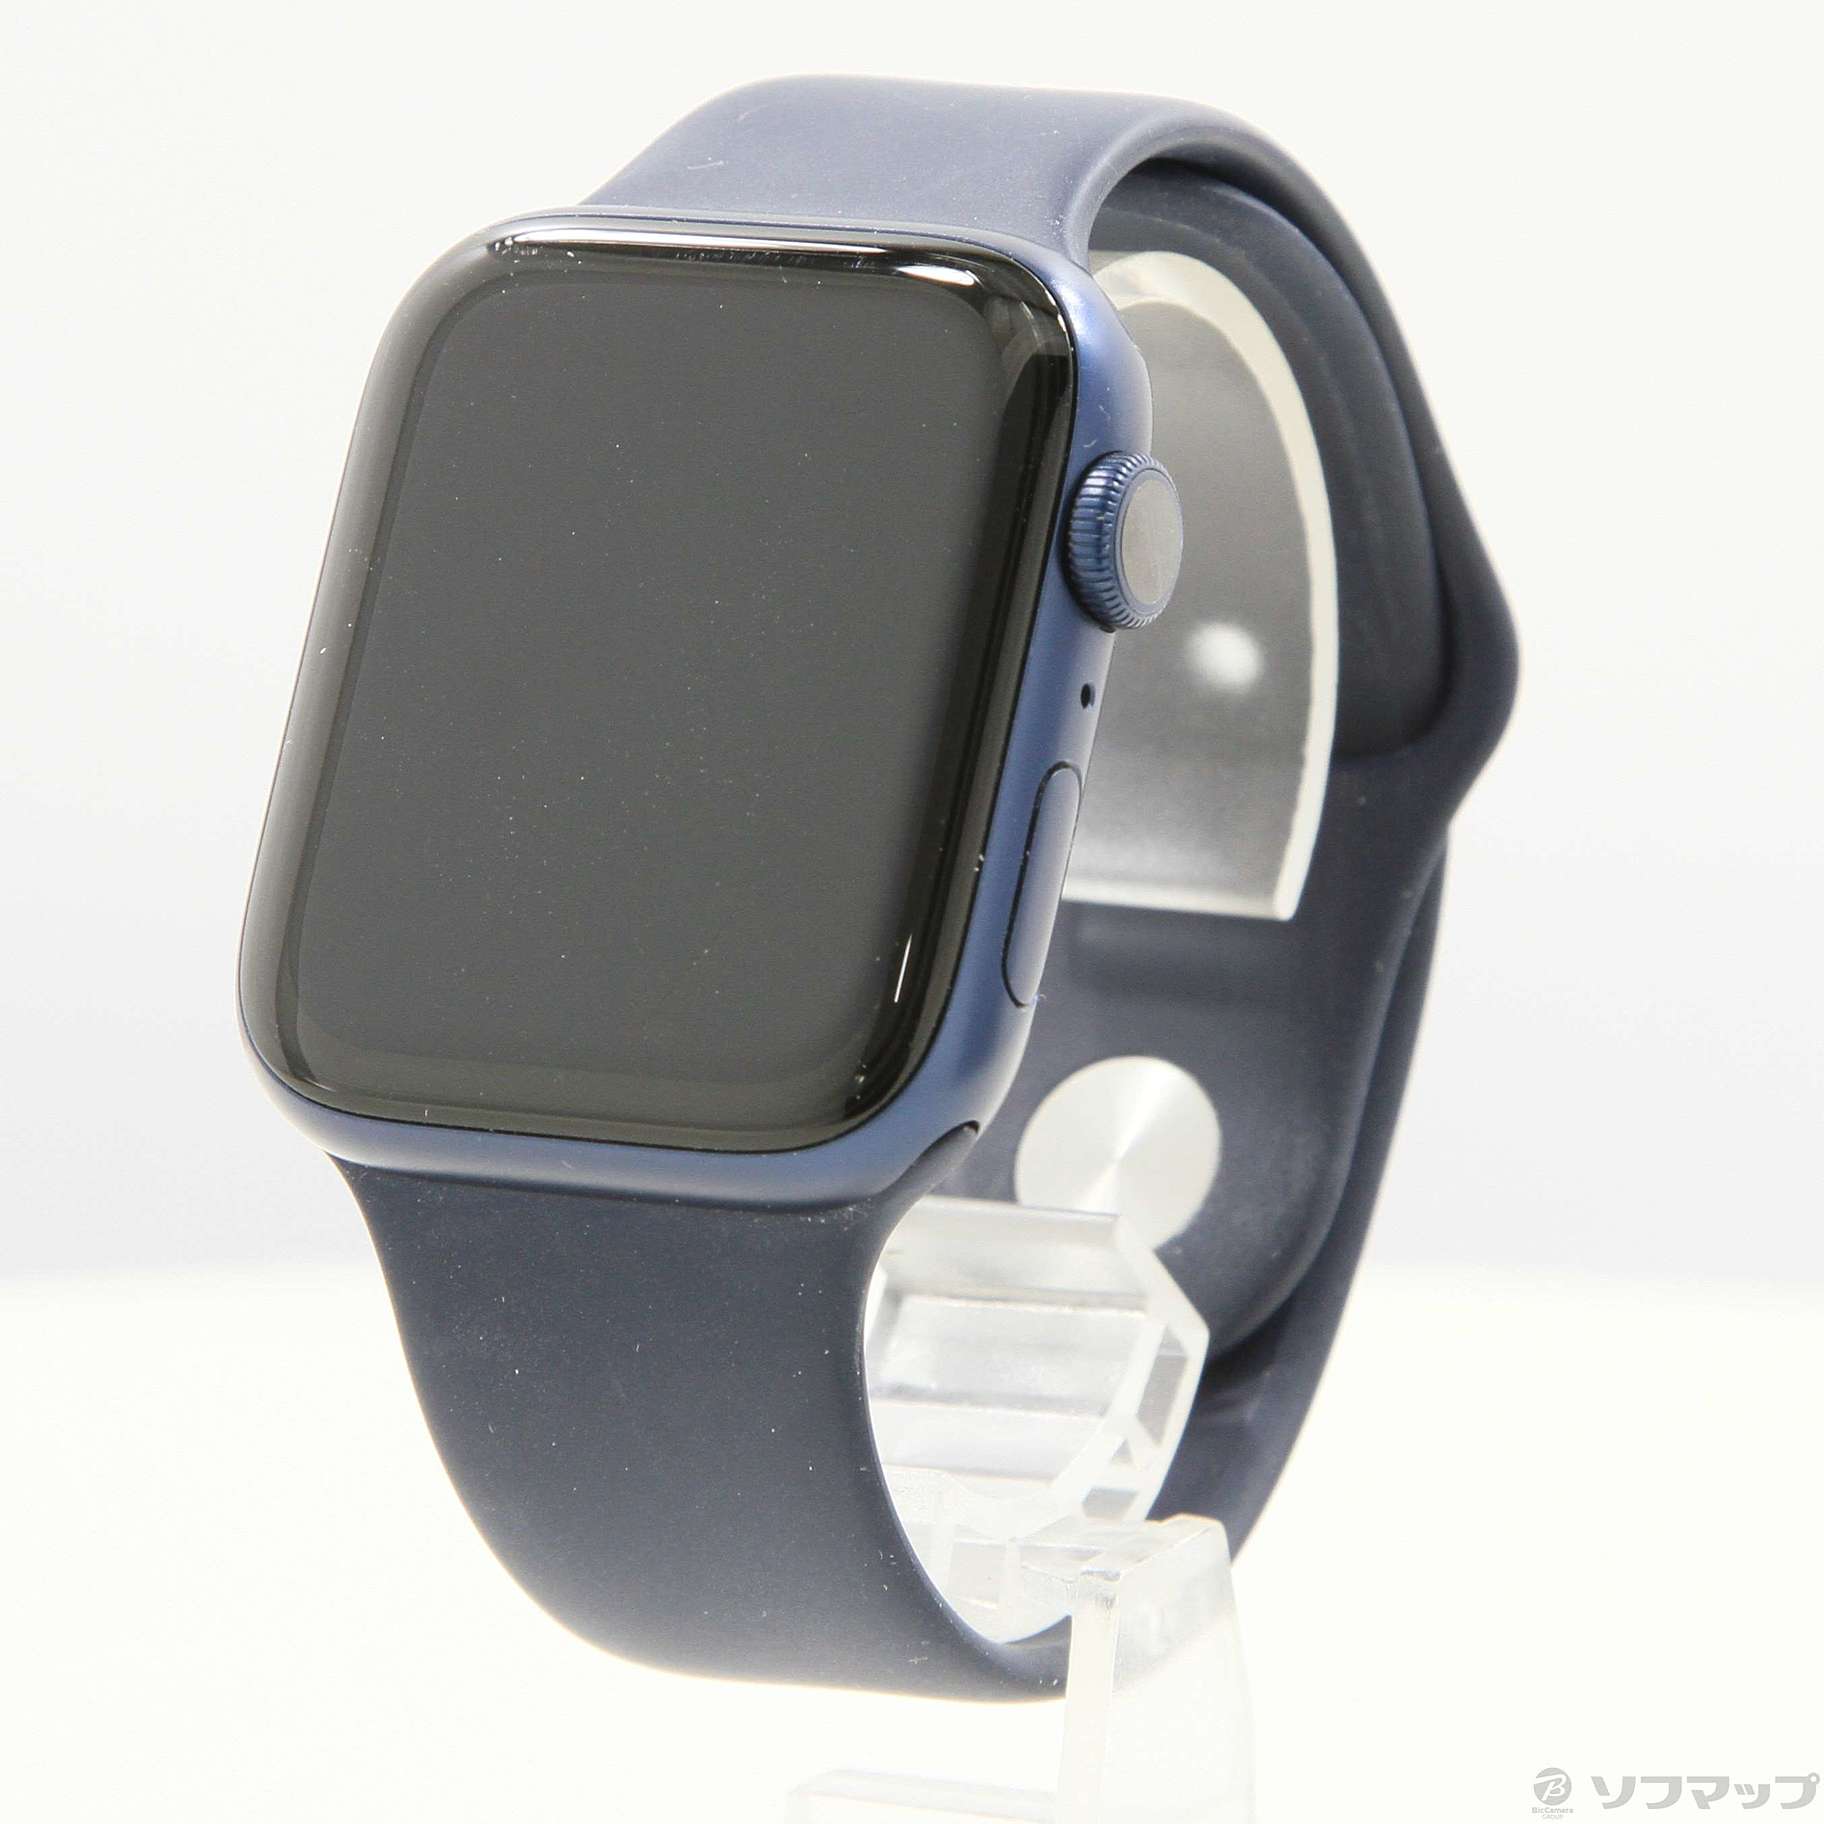 Apple Watch Series 6 44mm GPS ネイビーブルー腕時計(デジタル)